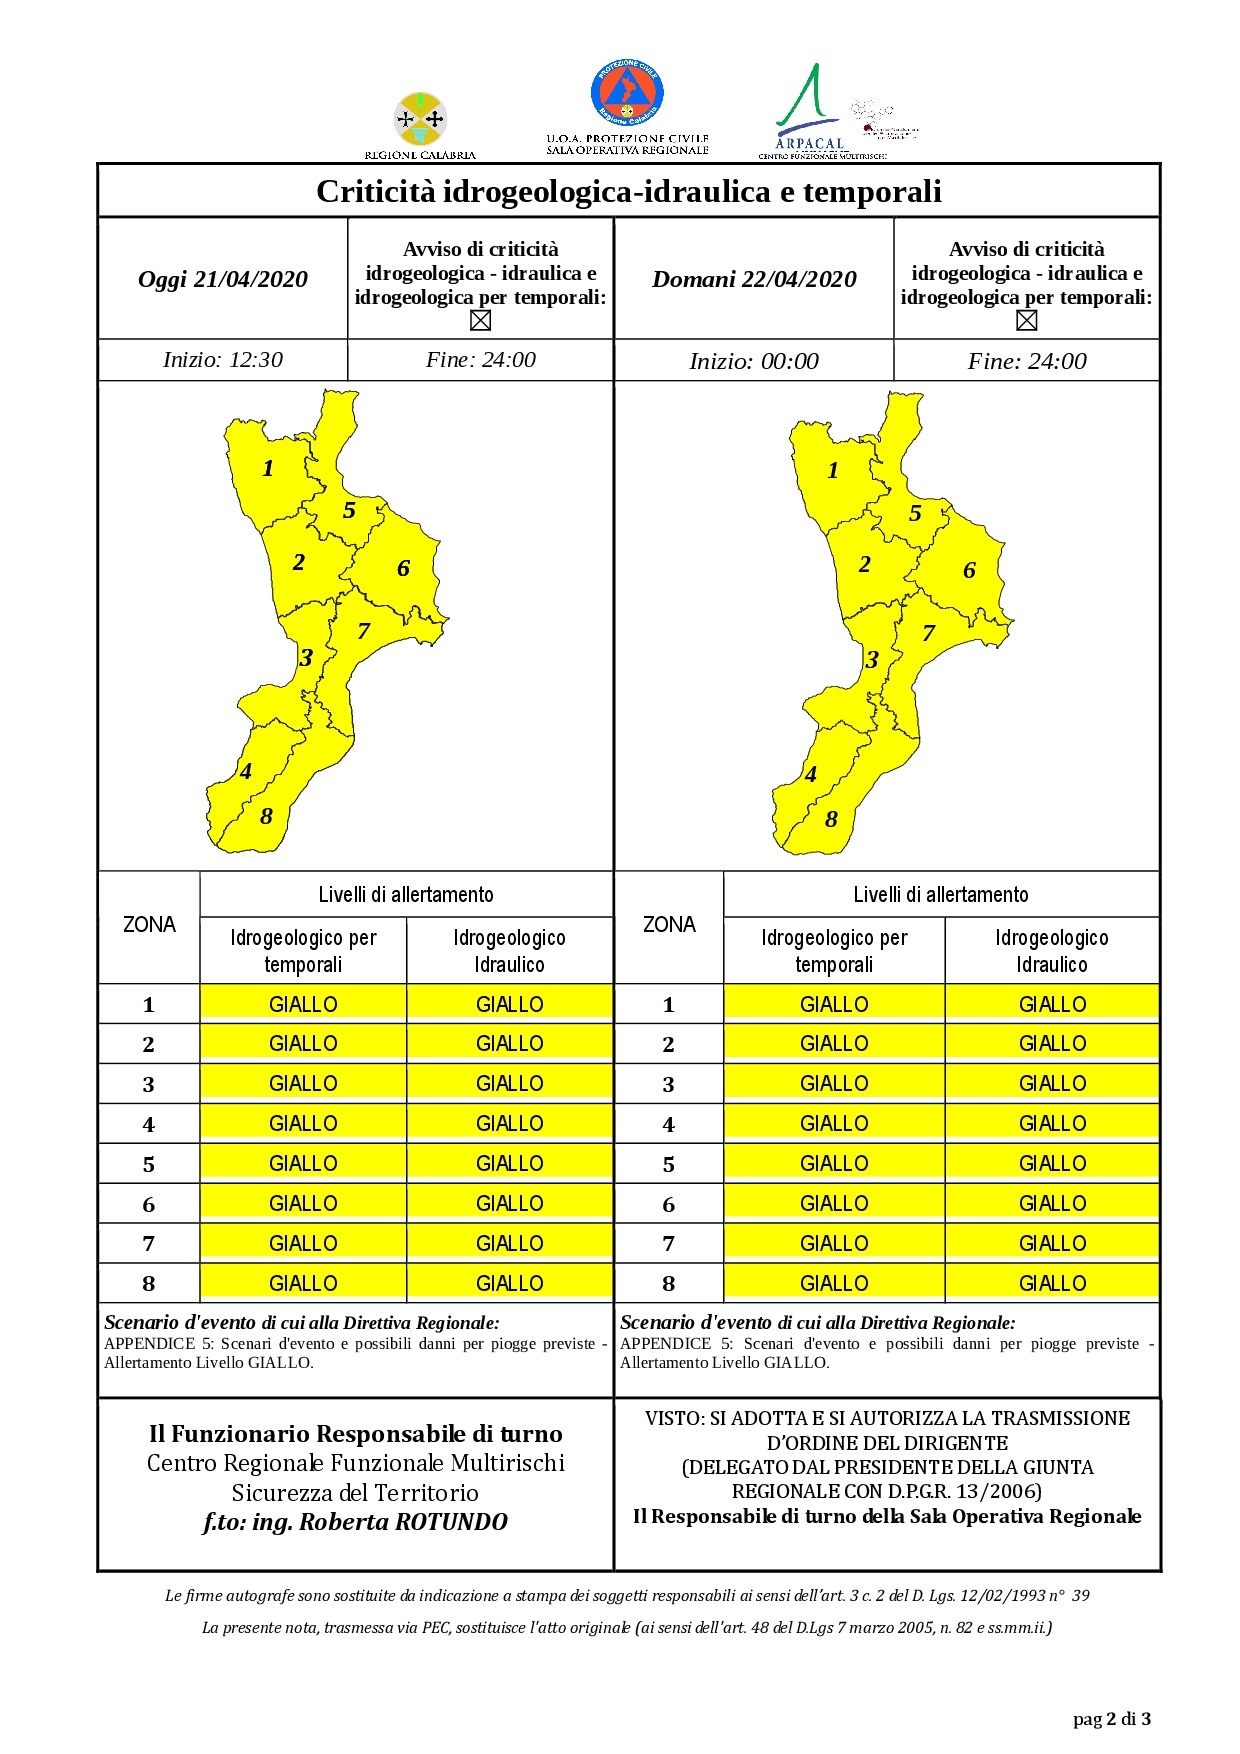 Criticità idrogeologica-idraulica e temporali in Calabria 21-04-2020